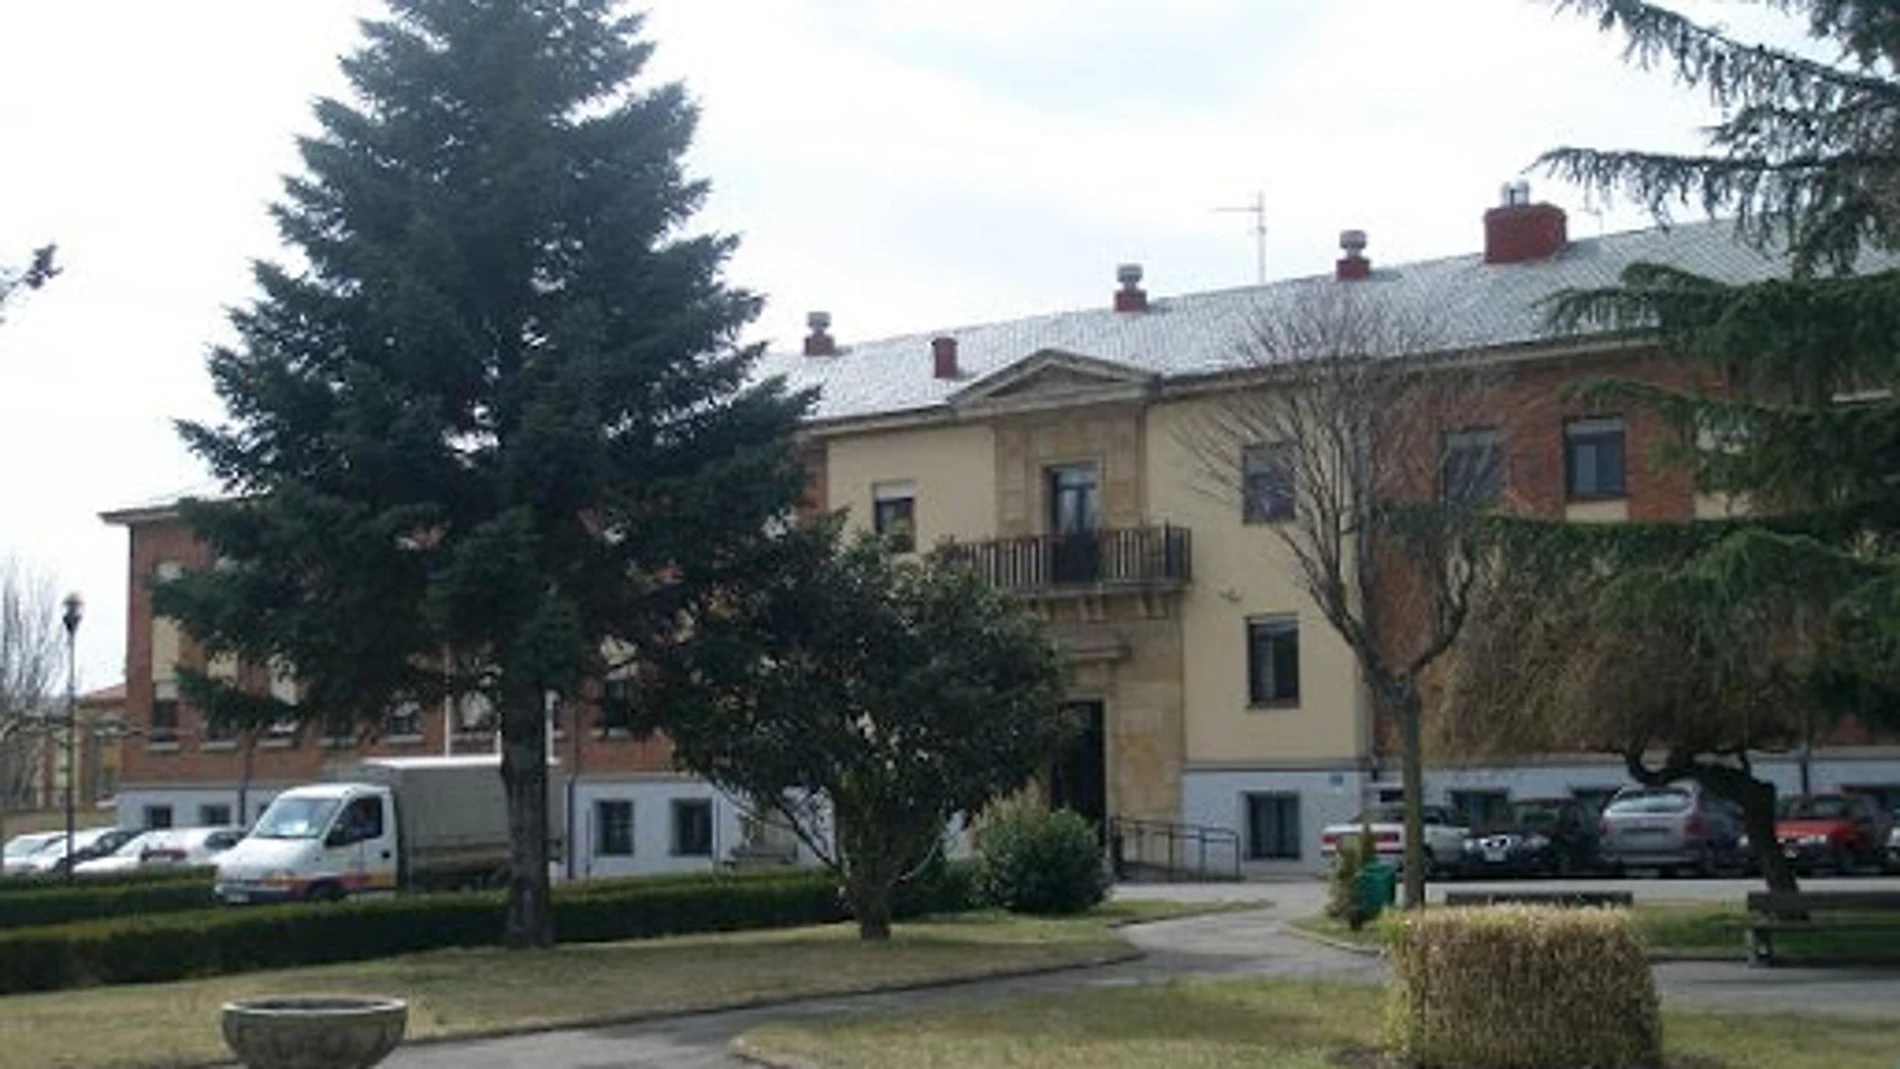 Residencia Santa Luisa, en León